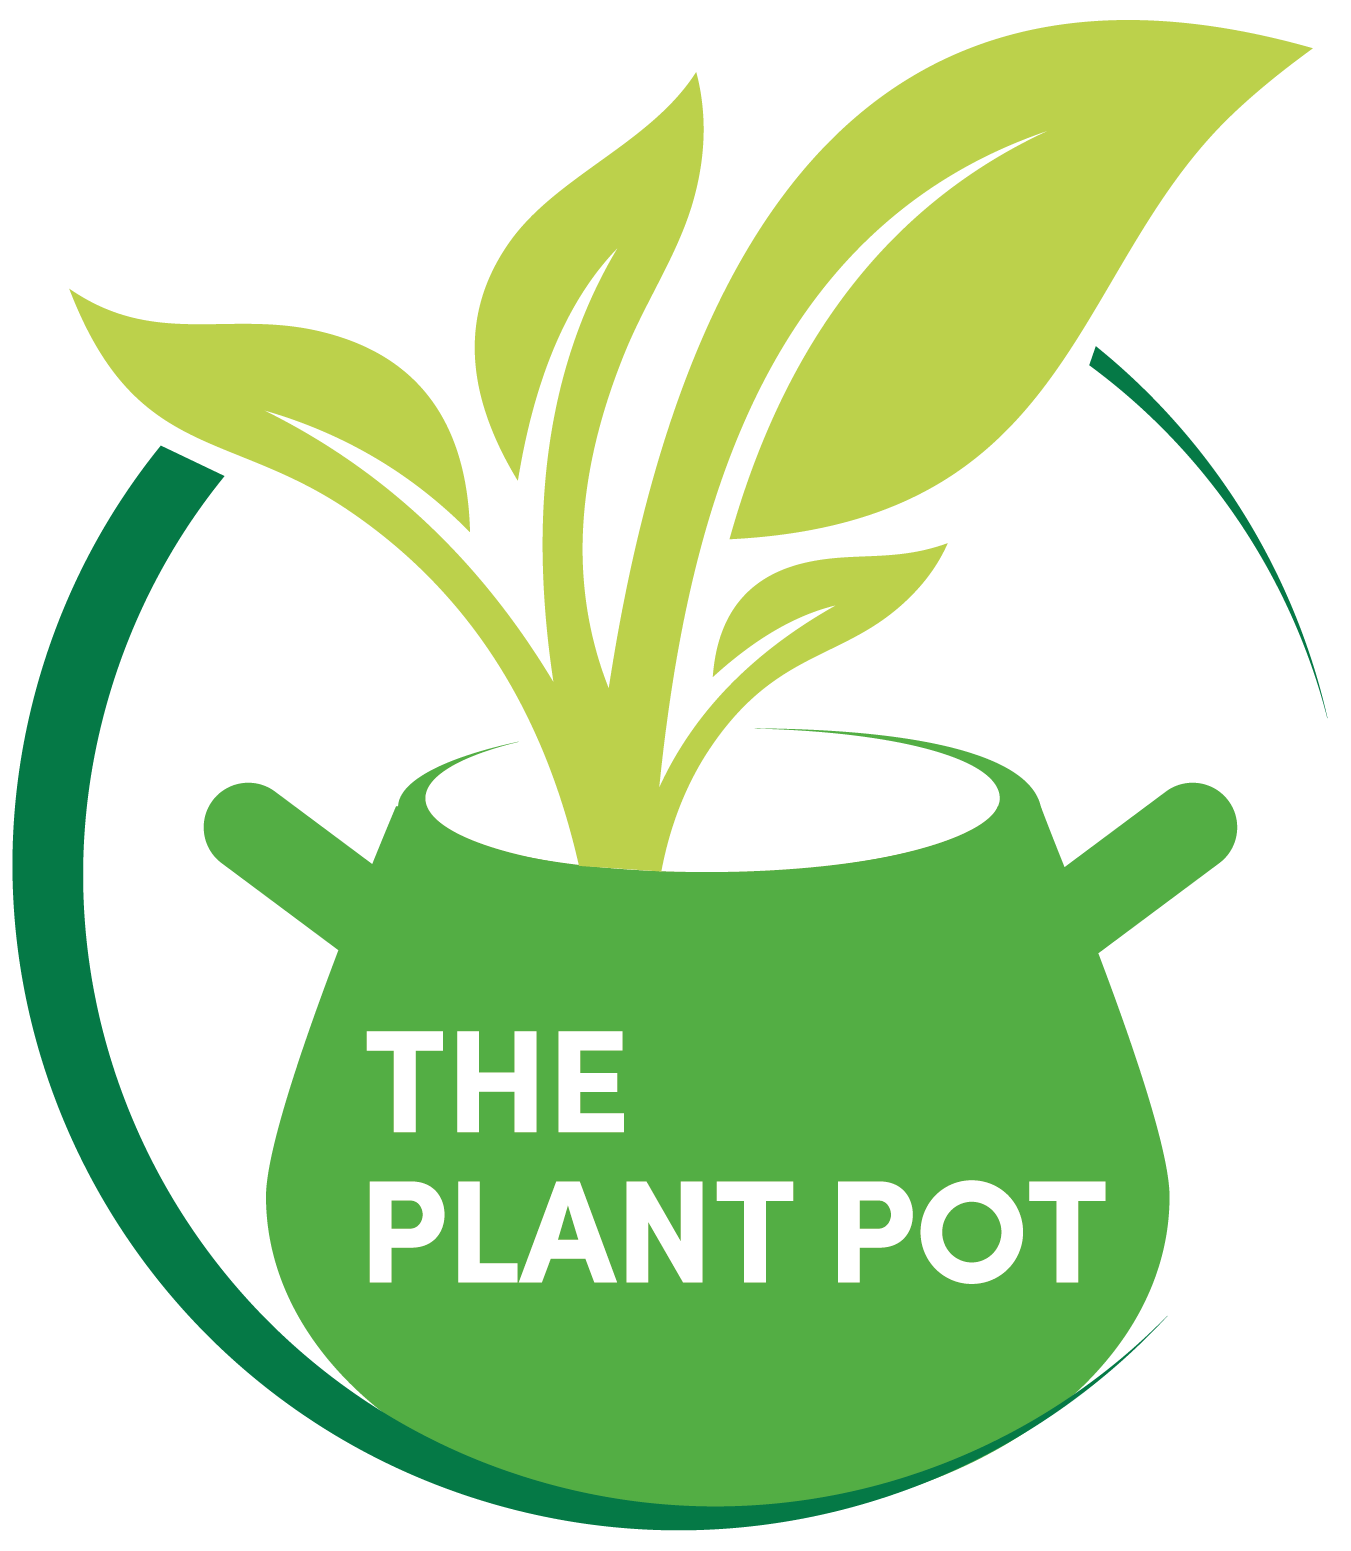 The Plant Pot logo